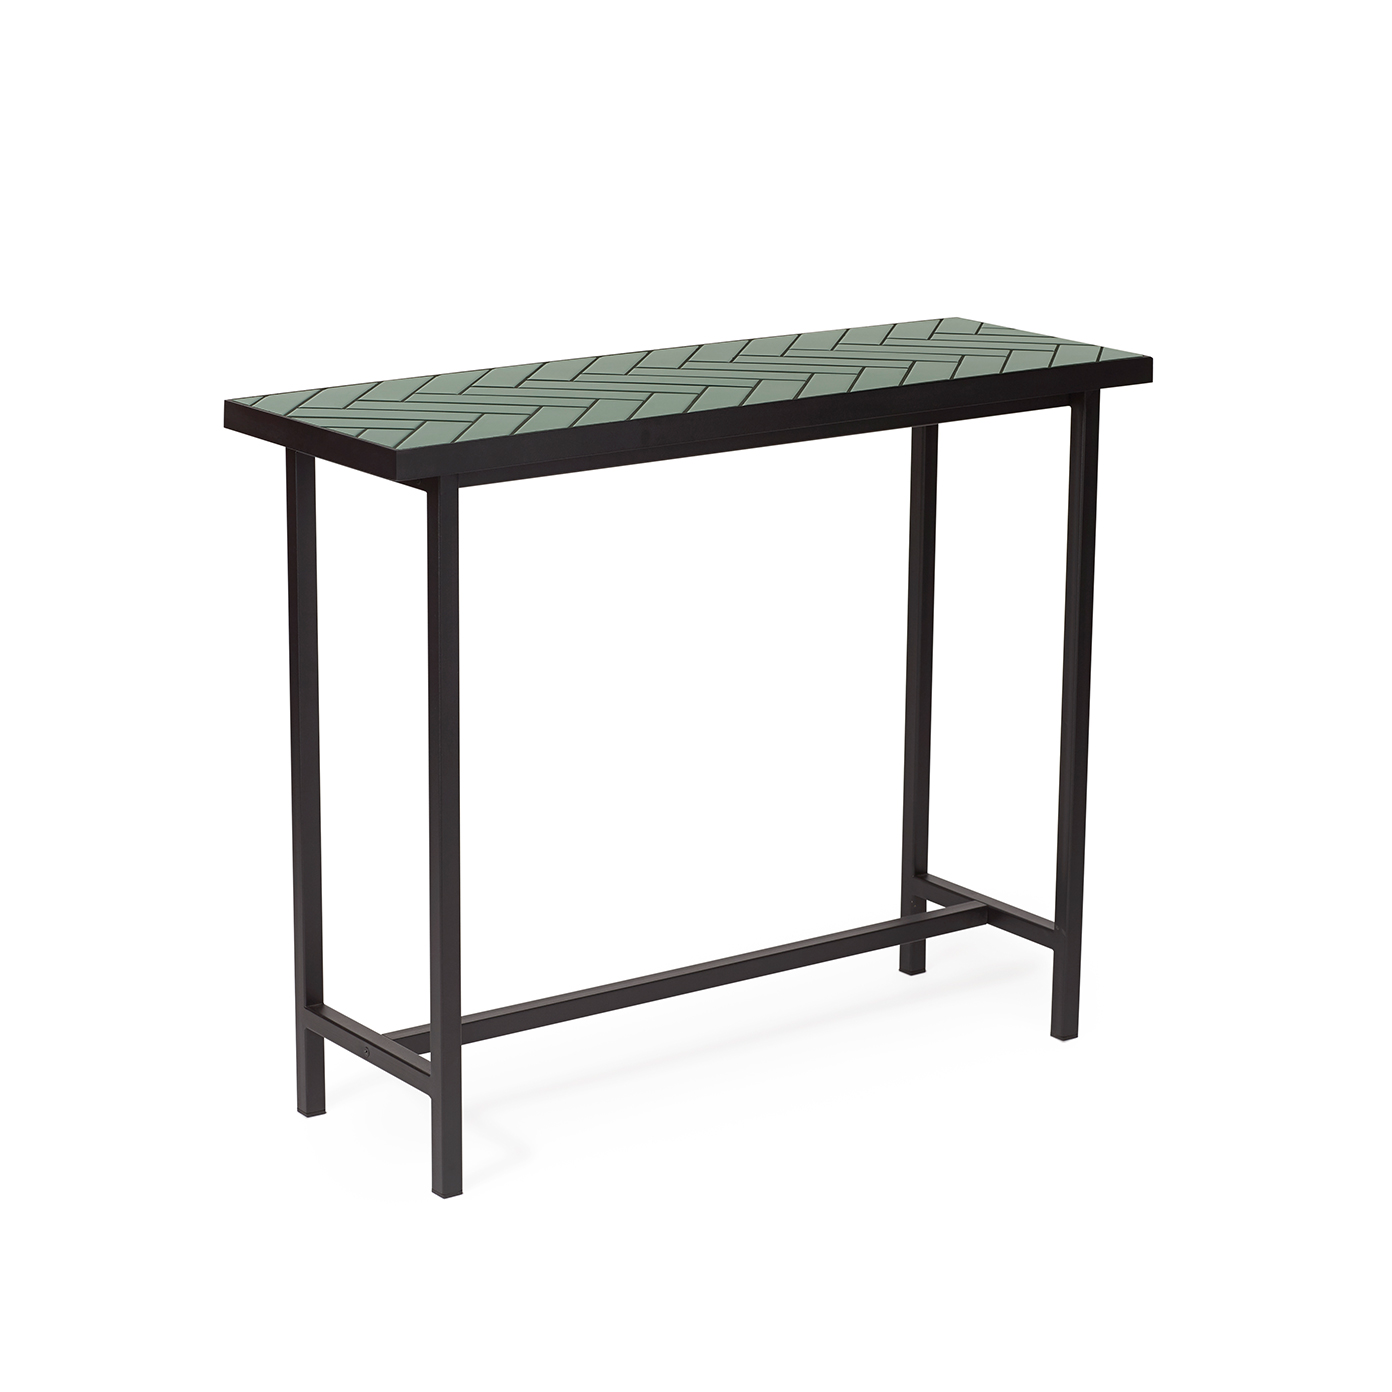 warmnordic furniture herringbone console steel blacknoir tiles forestgreen 02 1392x1392